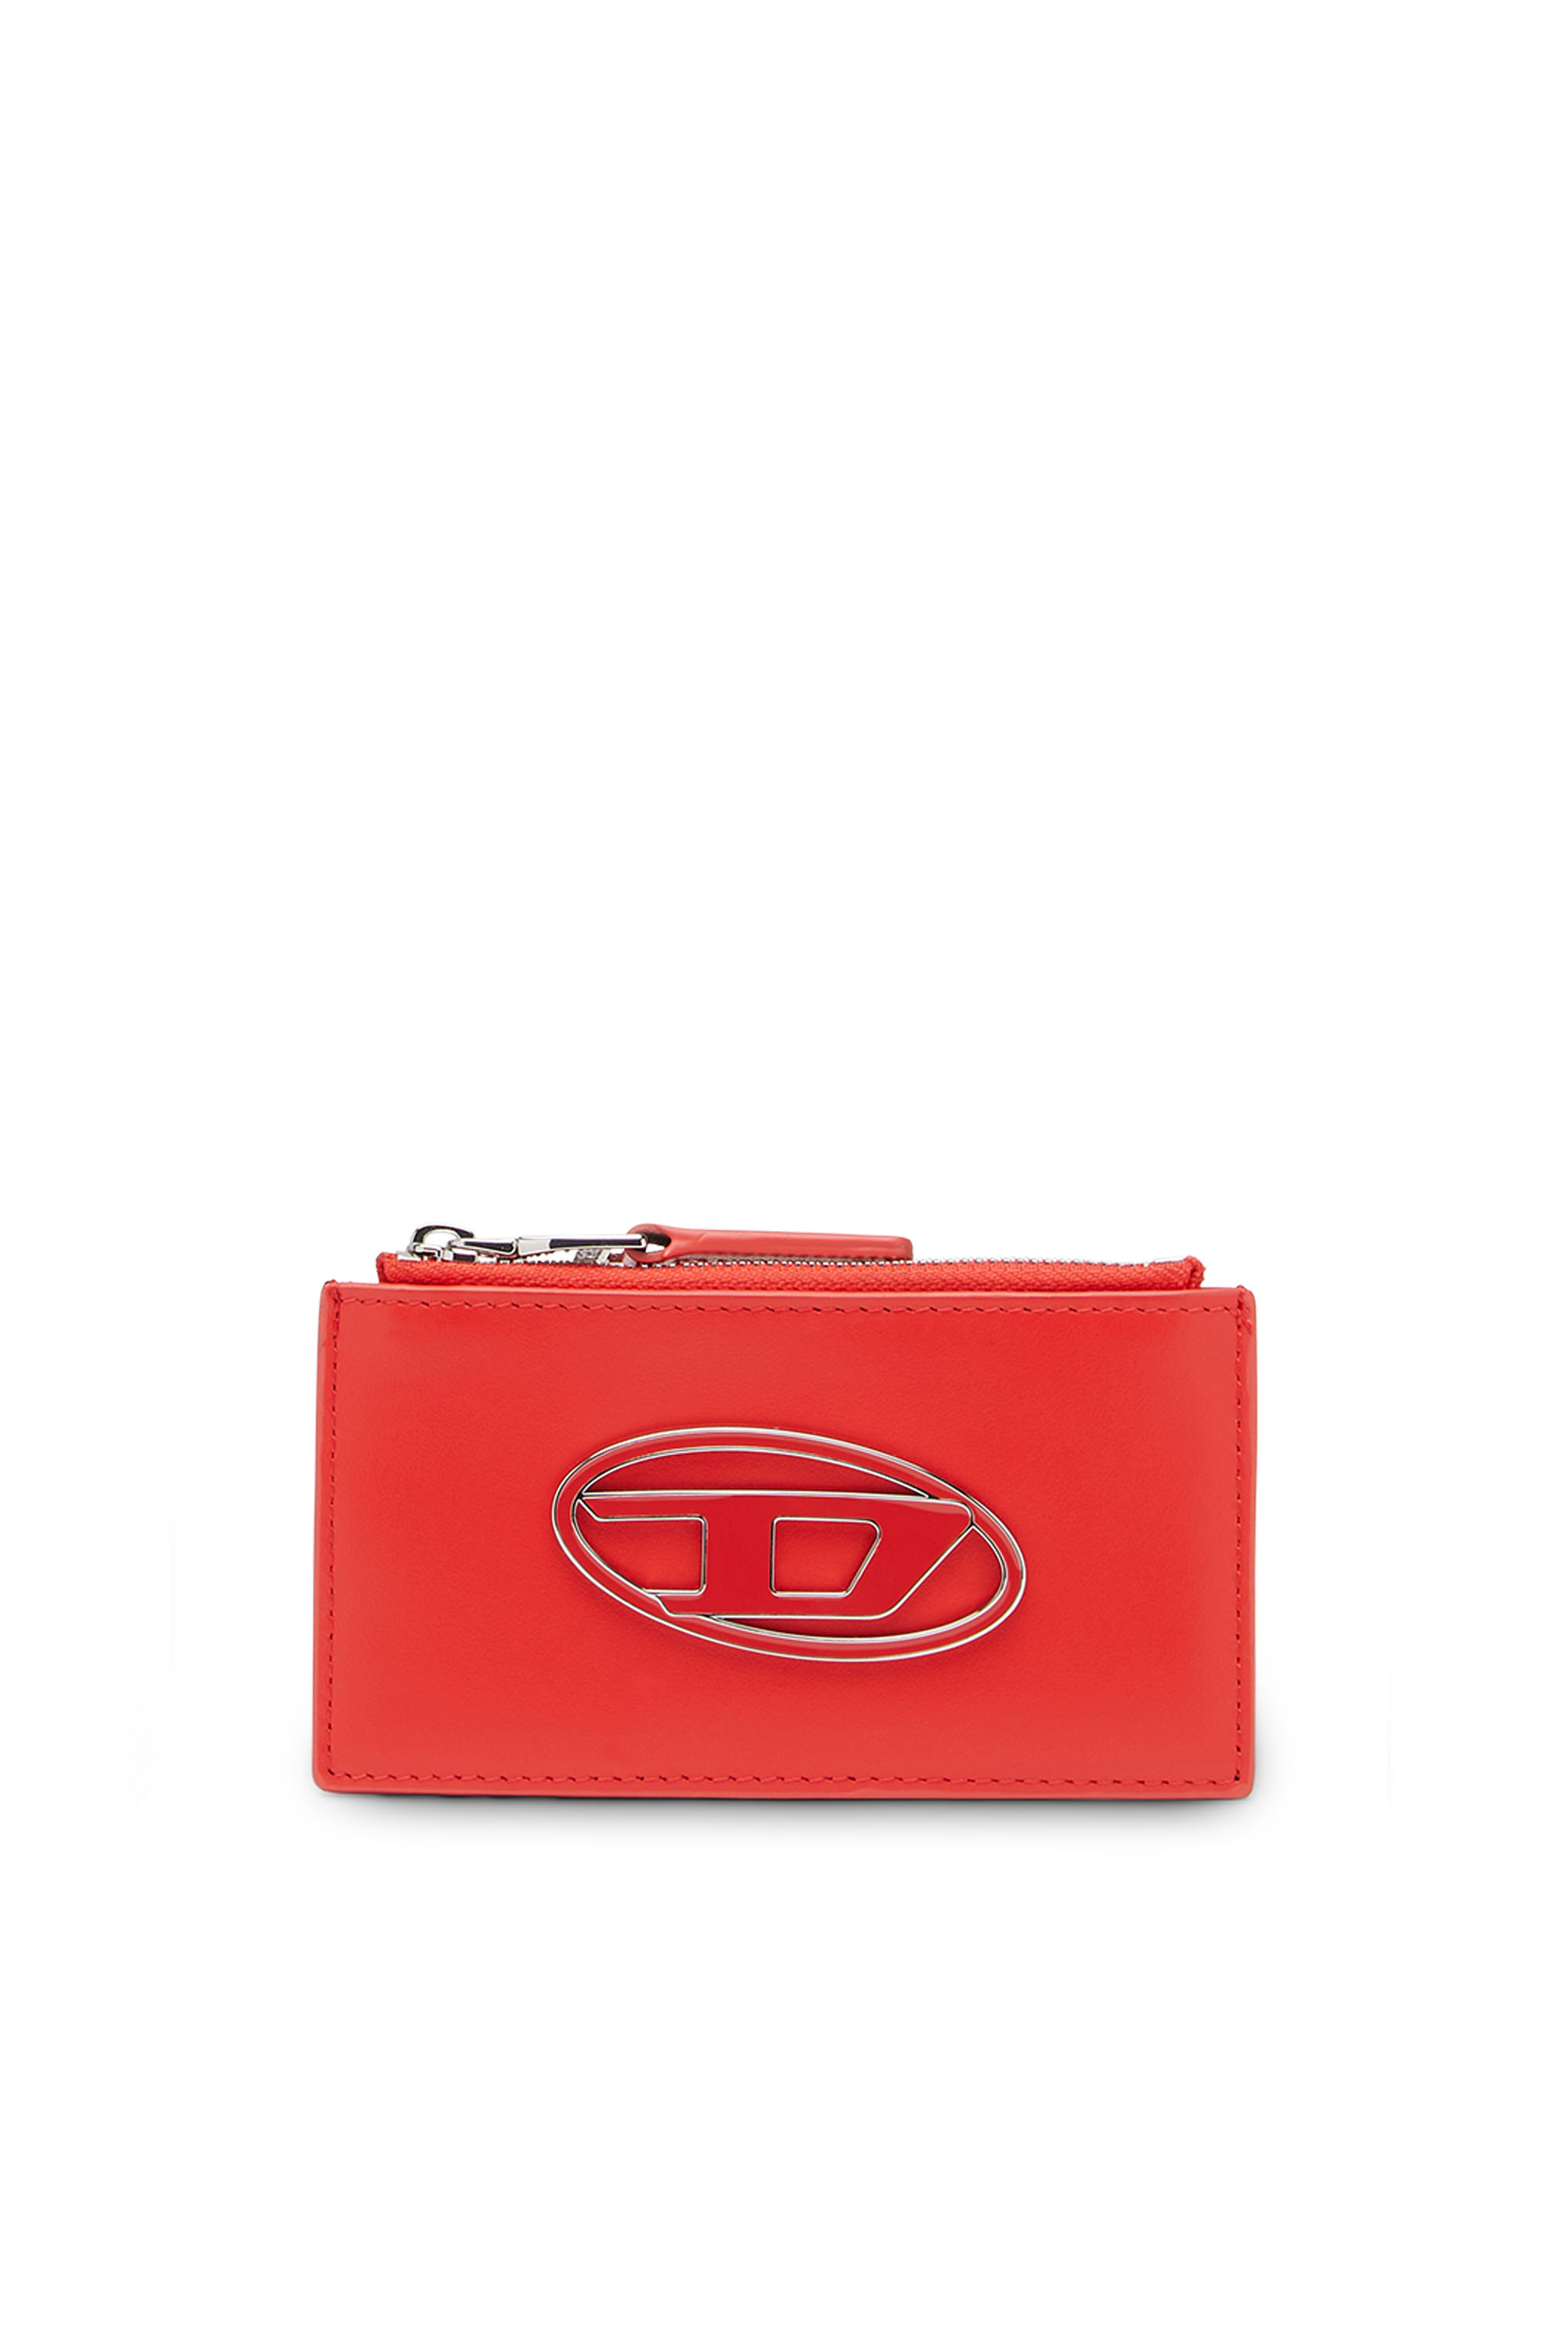 Diesel - Portacarte in pelle con targhetta con logo - Portacarte - Donna - Rosso